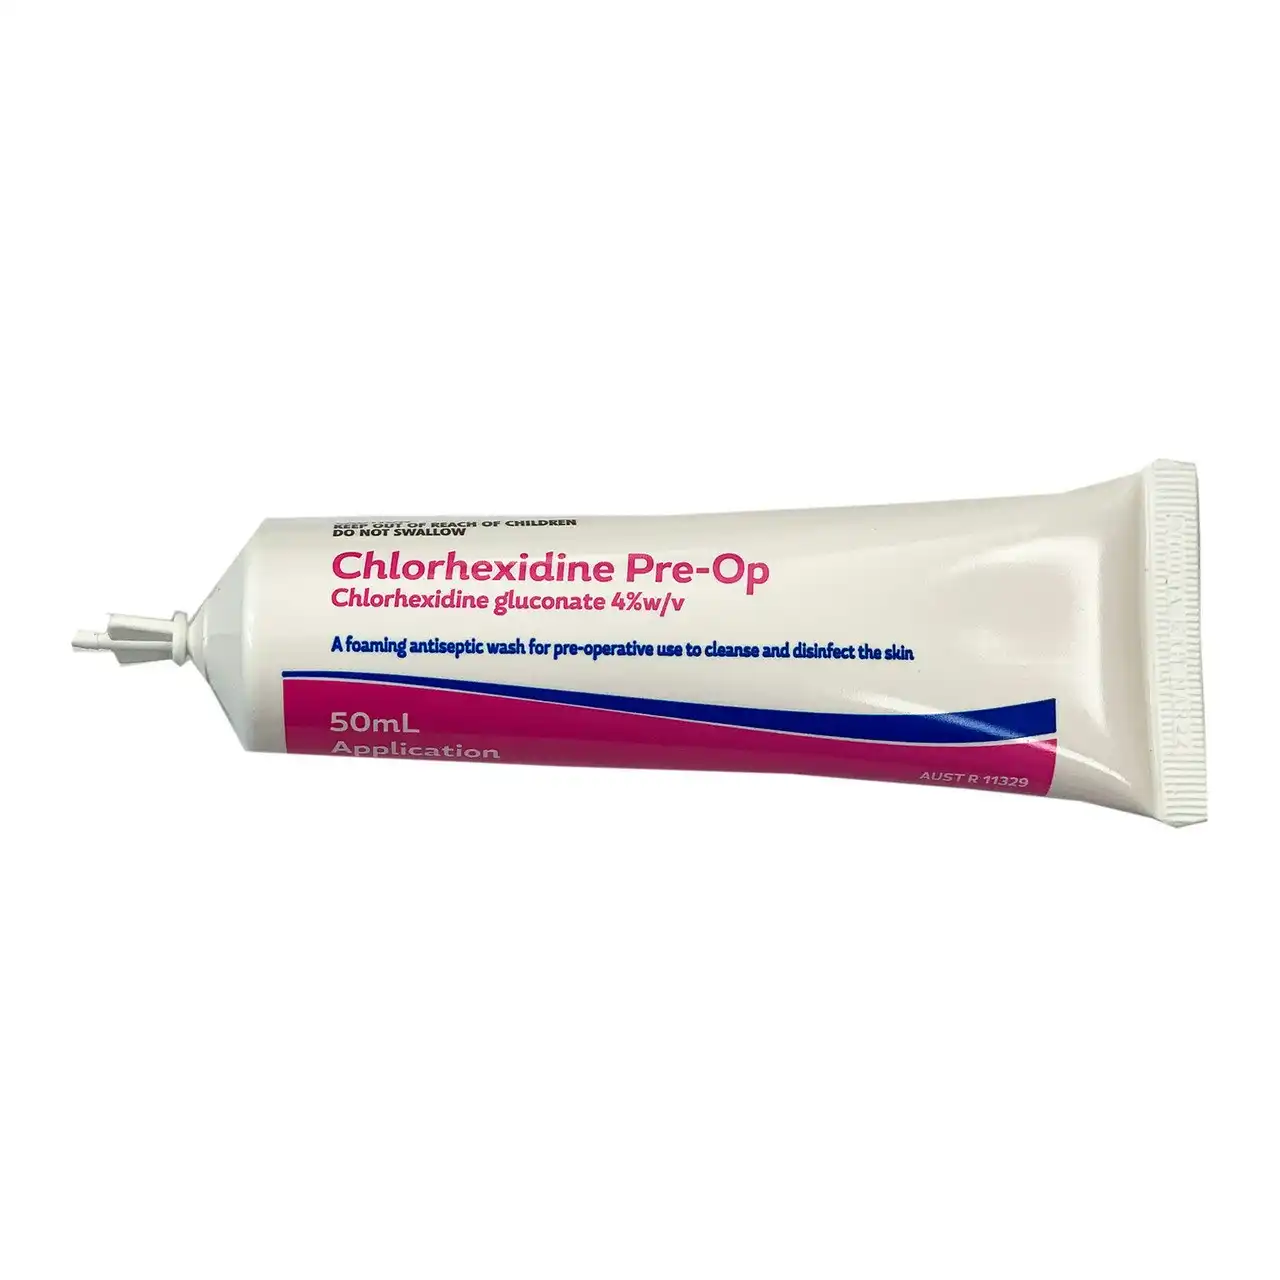 Chlorhexidine Pre-Op Foaming Antiseptic Wash 50ml